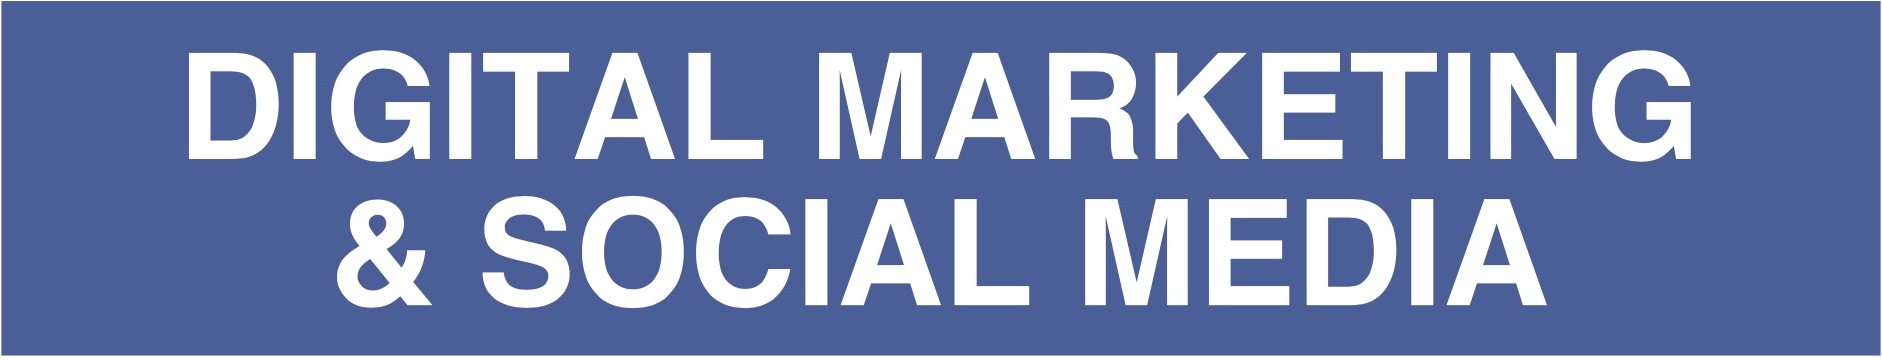 Digital Marketing and Social Media February 21, 2019